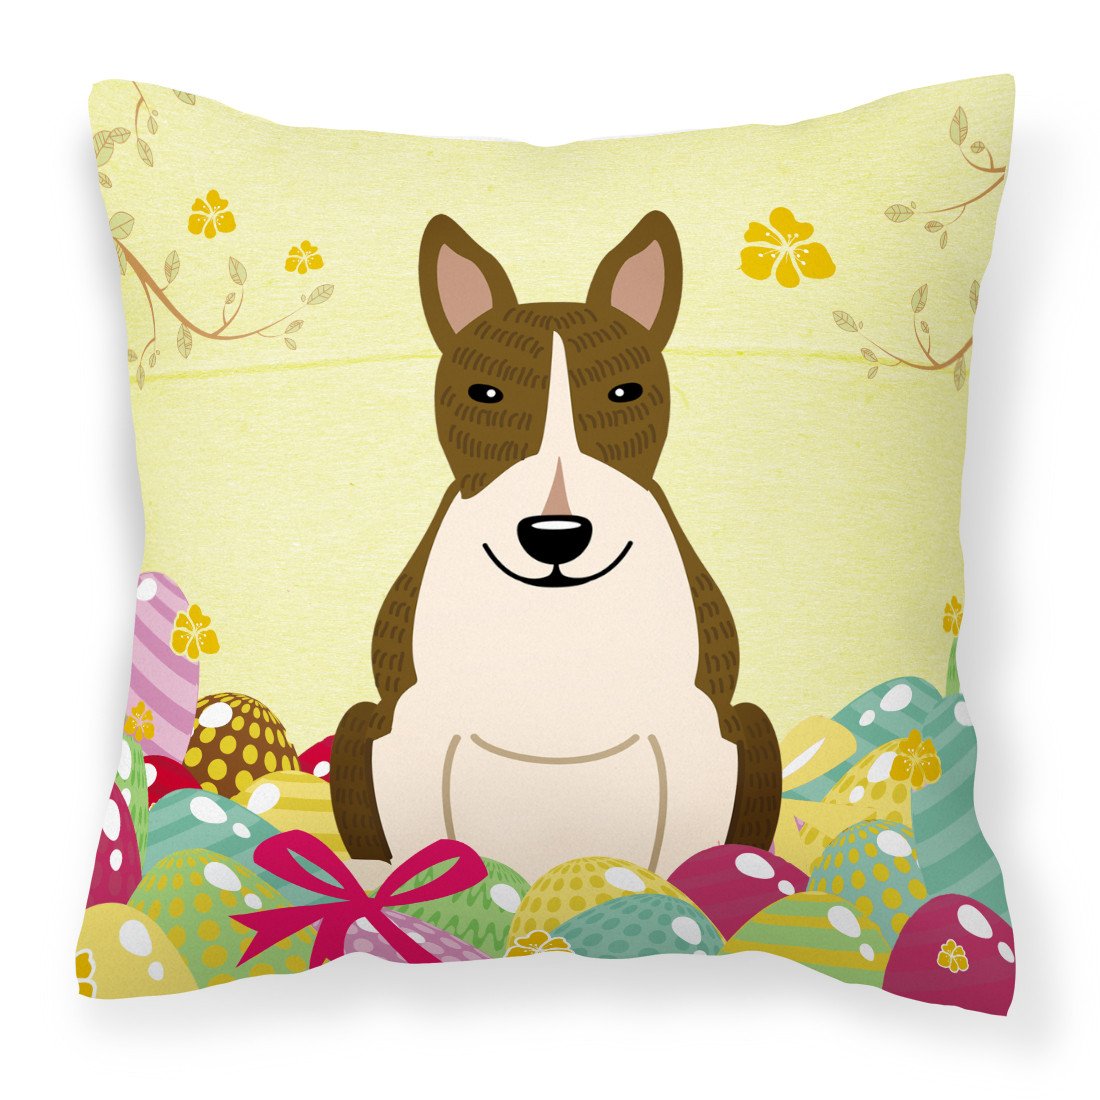 Easter Eggs Bull Terrier Dark Brindle Fabric Decorative Pillow BB6136PW1818 by Caroline's Treasures